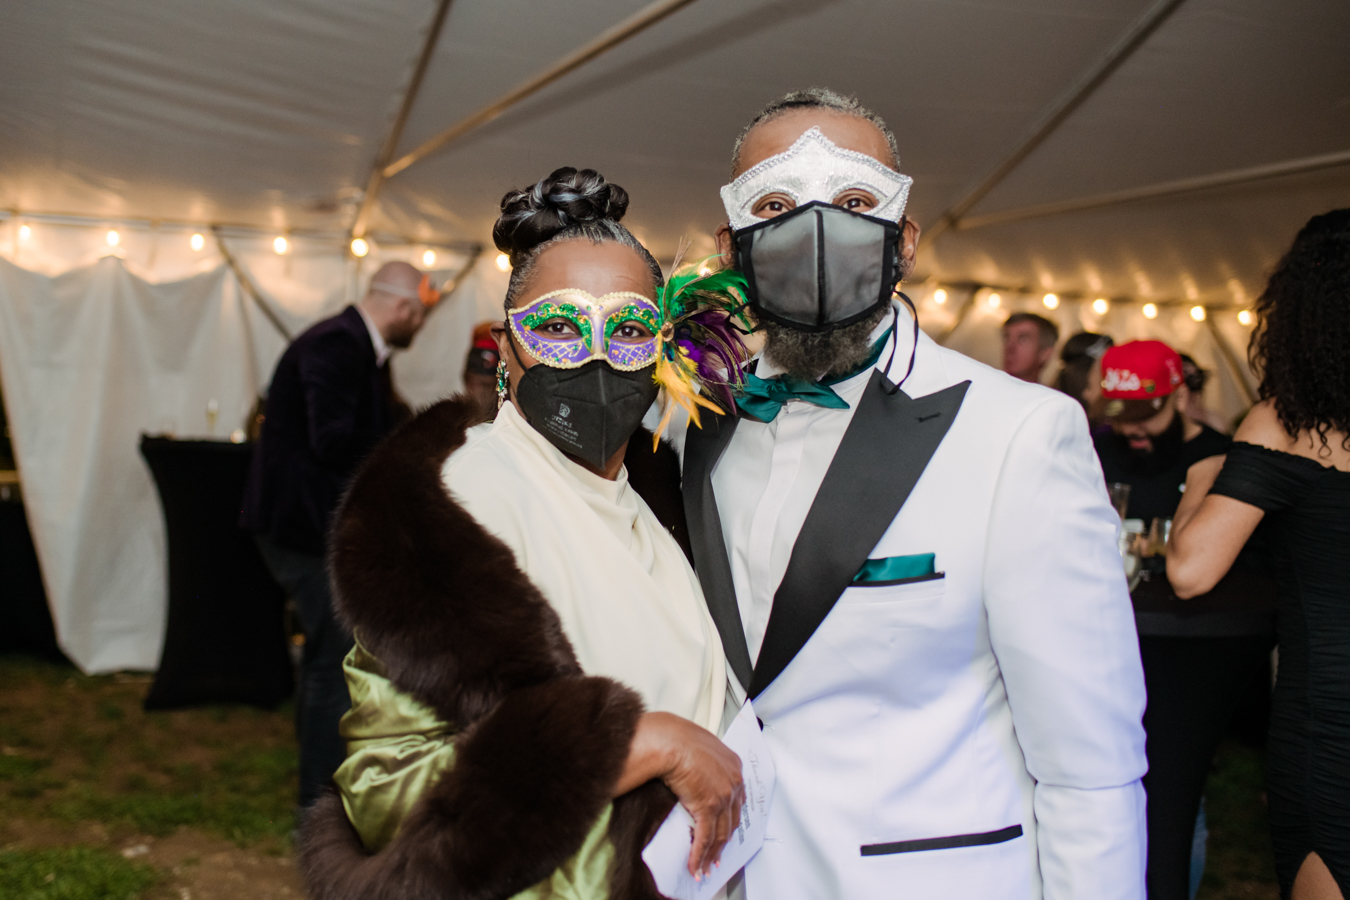 guests pose together at SFNC masquerade gala wearing masks